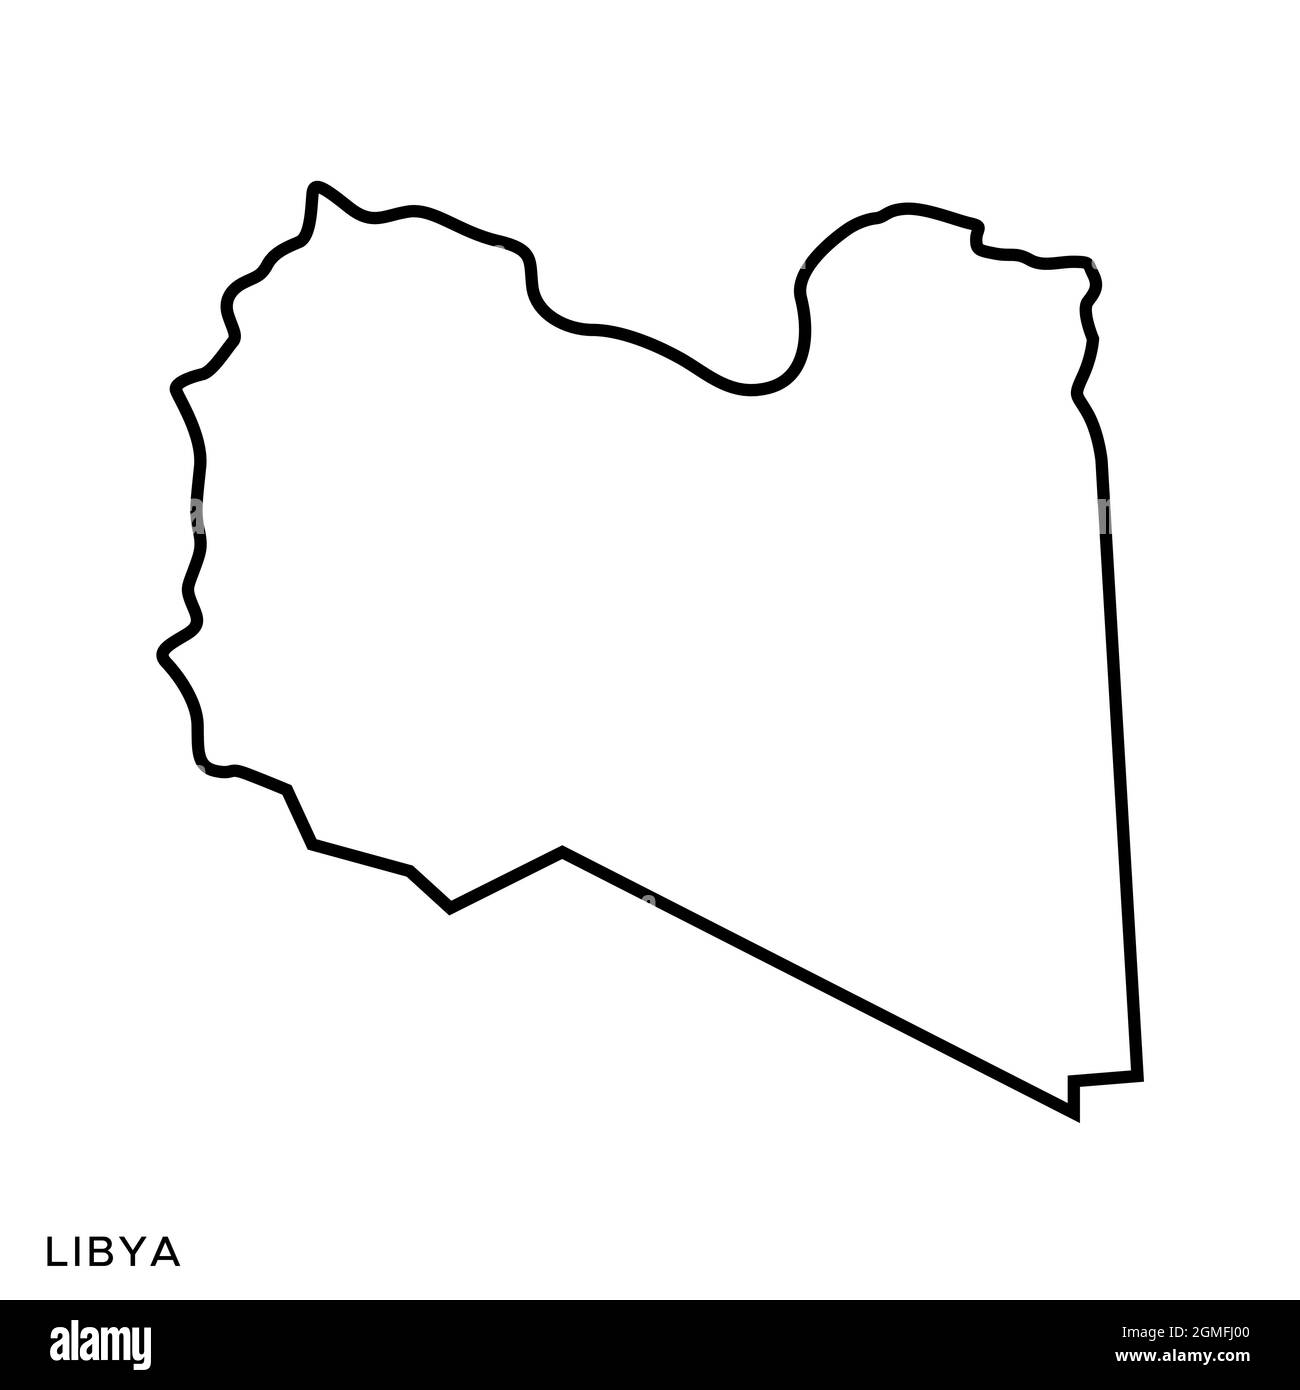 Line Map Of Libya Vector Stock Illustration Design Template Editable